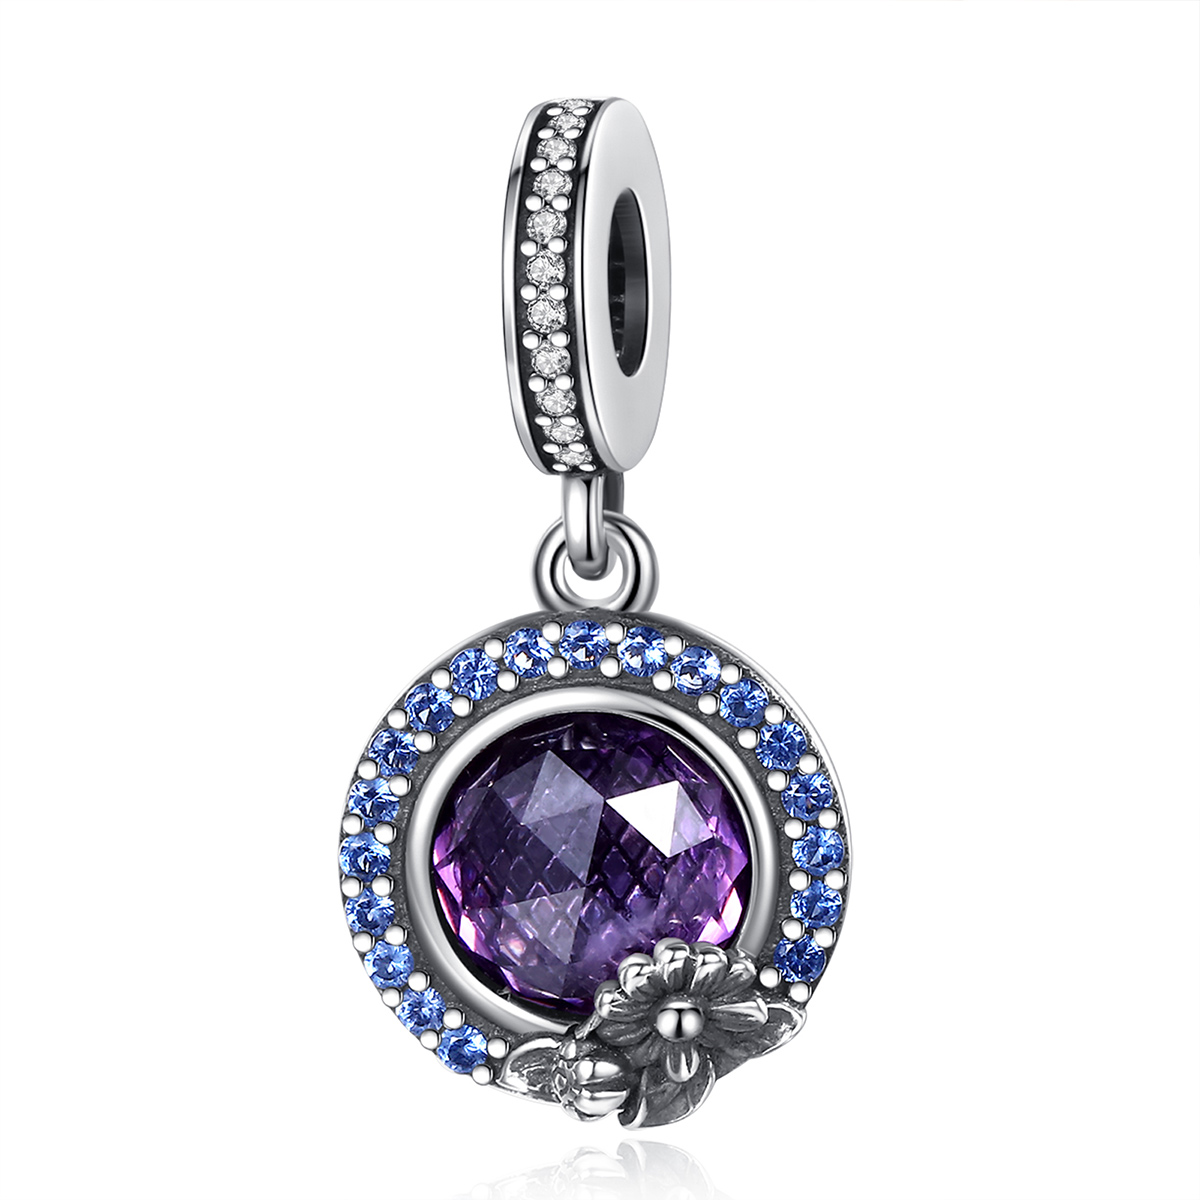 Merryshine 925 sterling silver purple cubic zirconia luxury fine jewelry pendants charms for bracelets